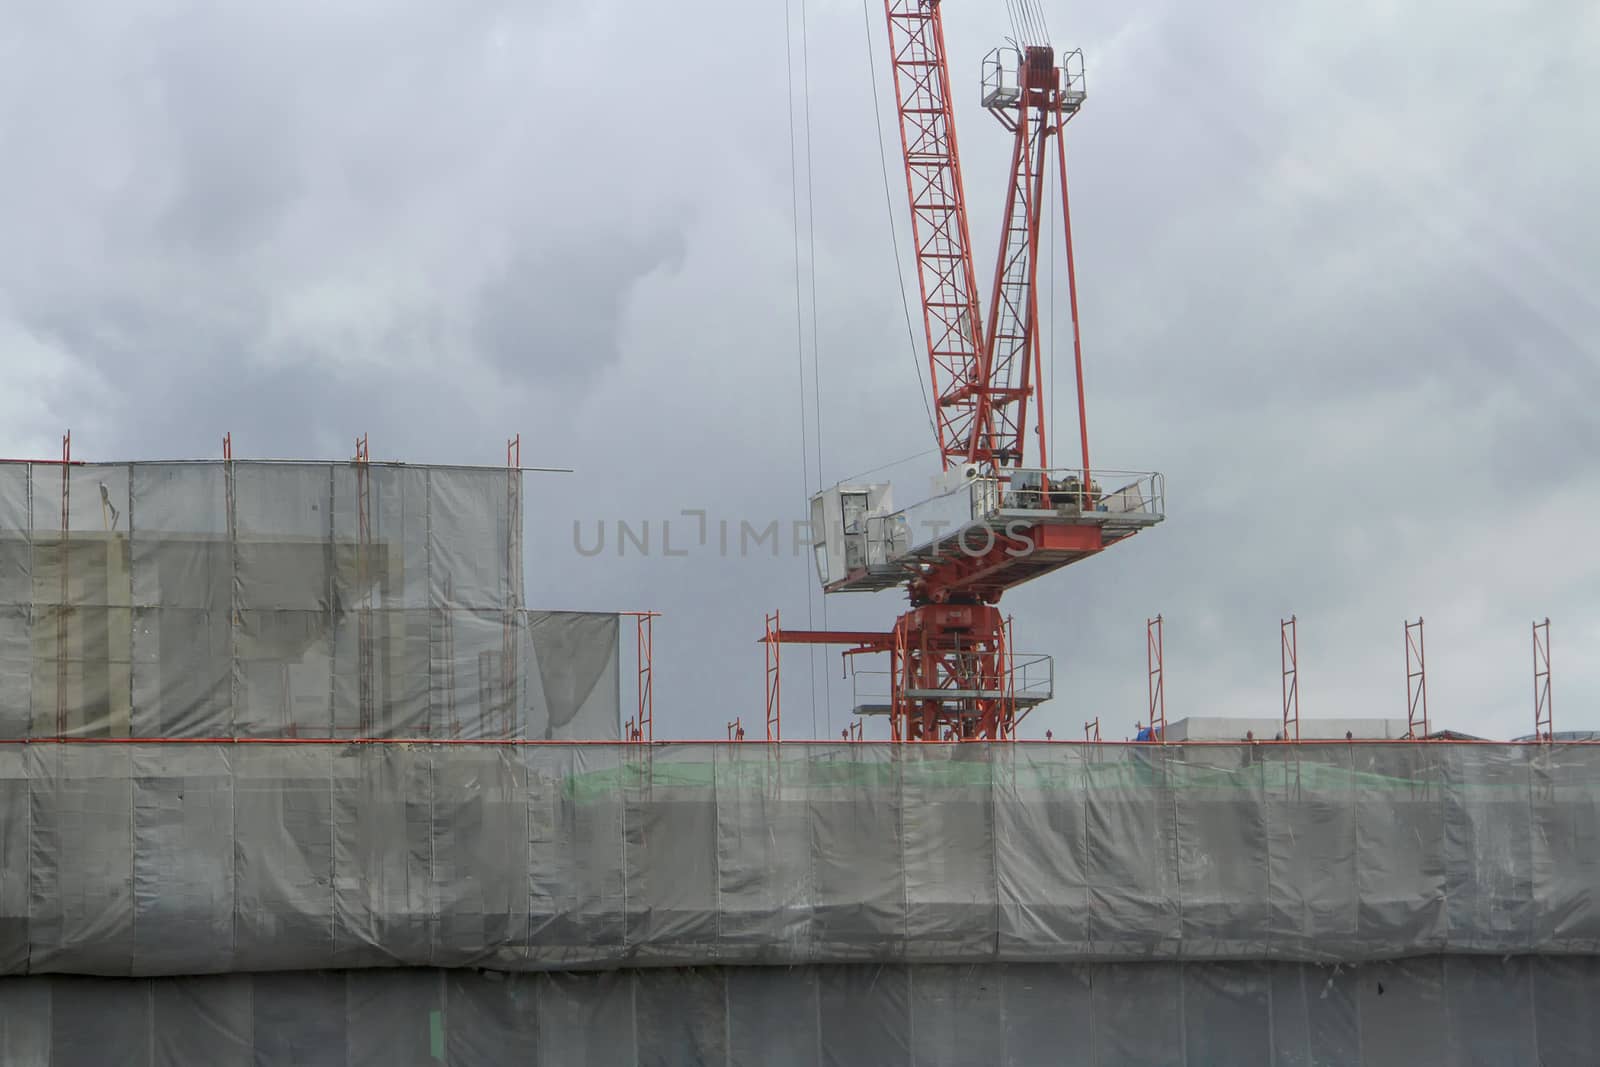 Red crane is under construction. by TakerWalker